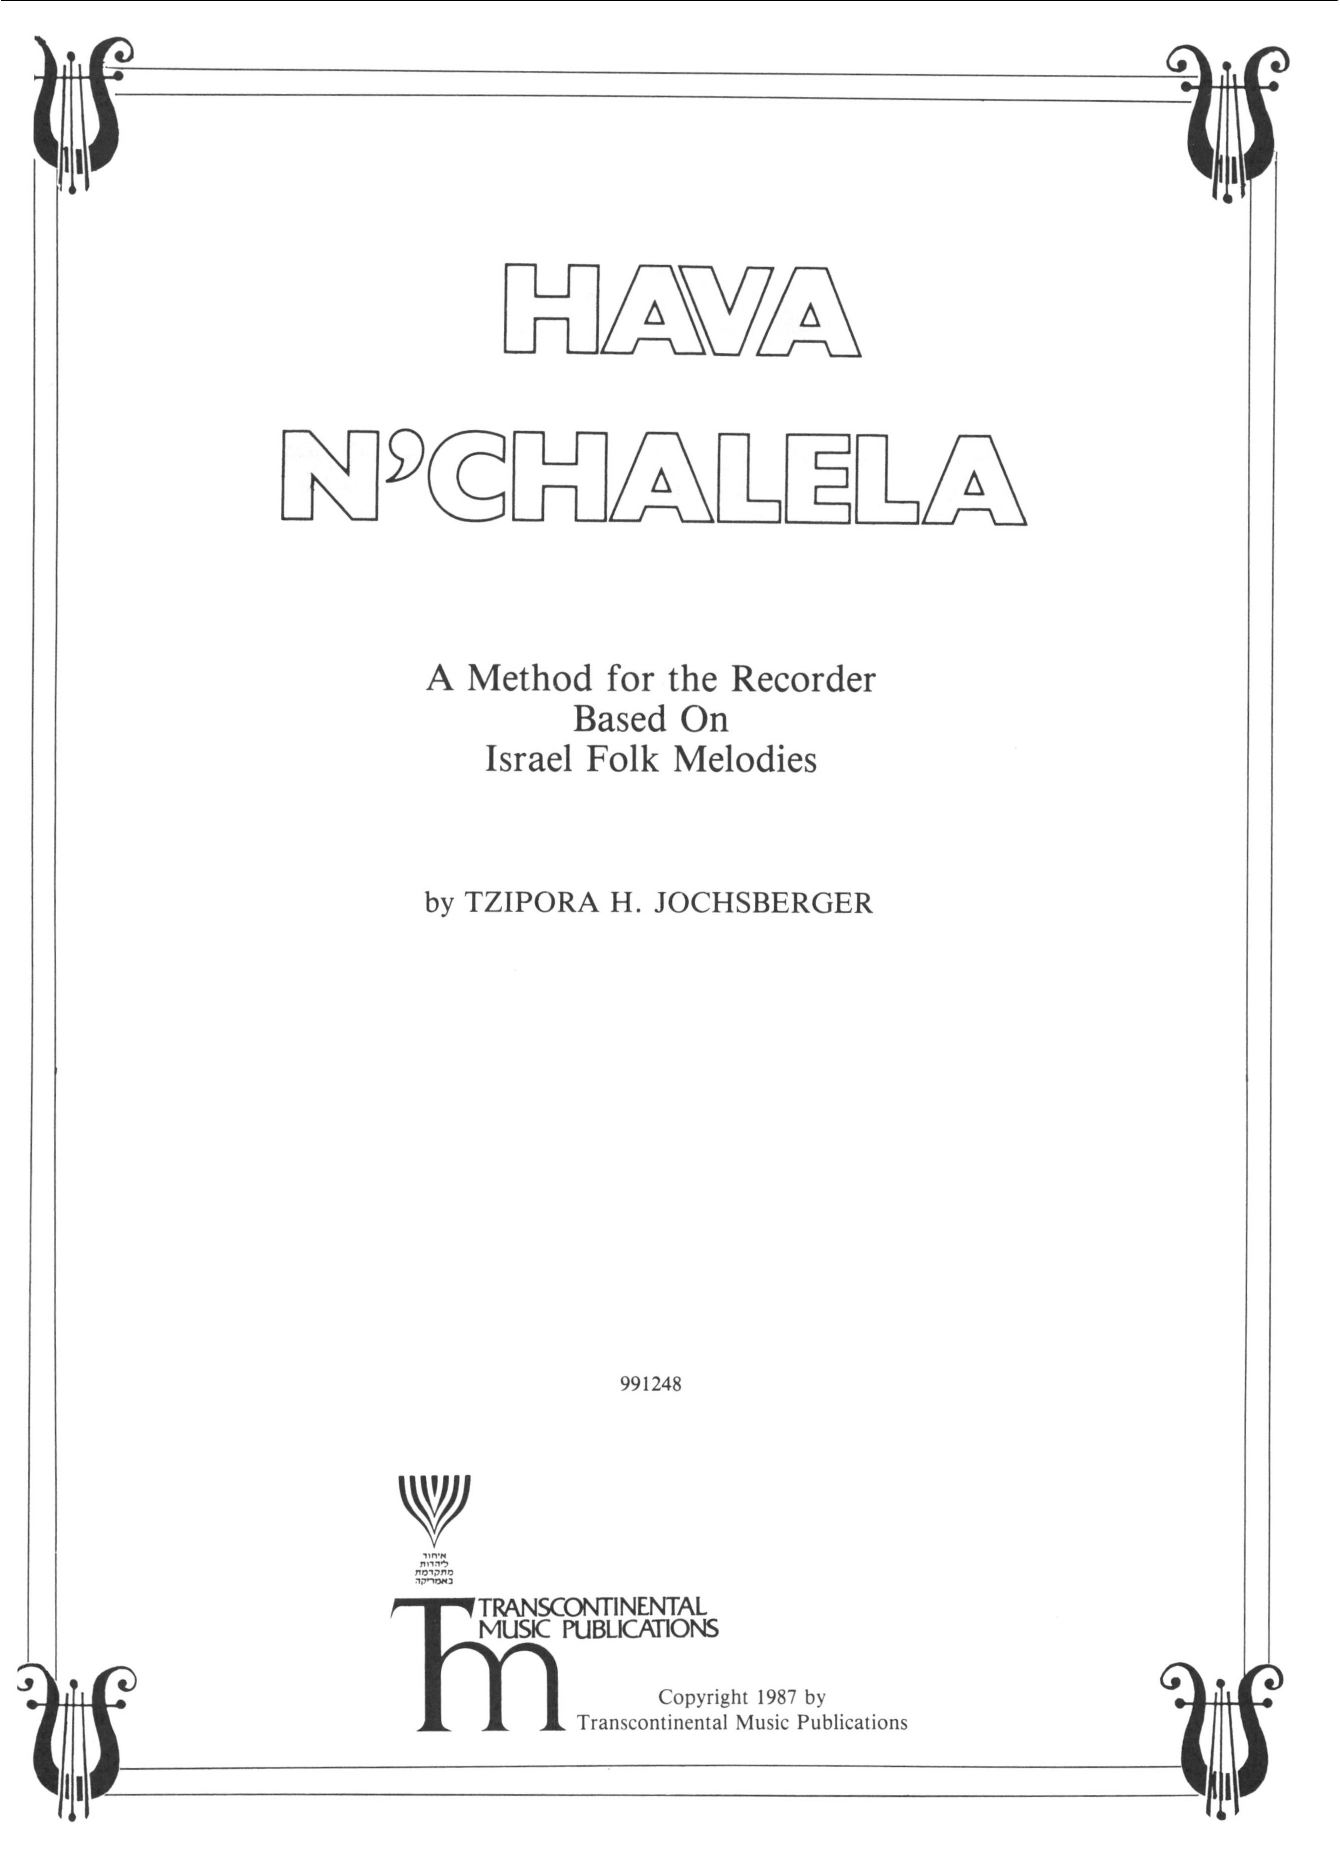 Tzipora H. Jochsberger Hava N'Chalela (A Method for the Recorder Based On Israel Folk Melodies) Sheet Music Notes & Chords for Instrumental Method - Download or Print PDF